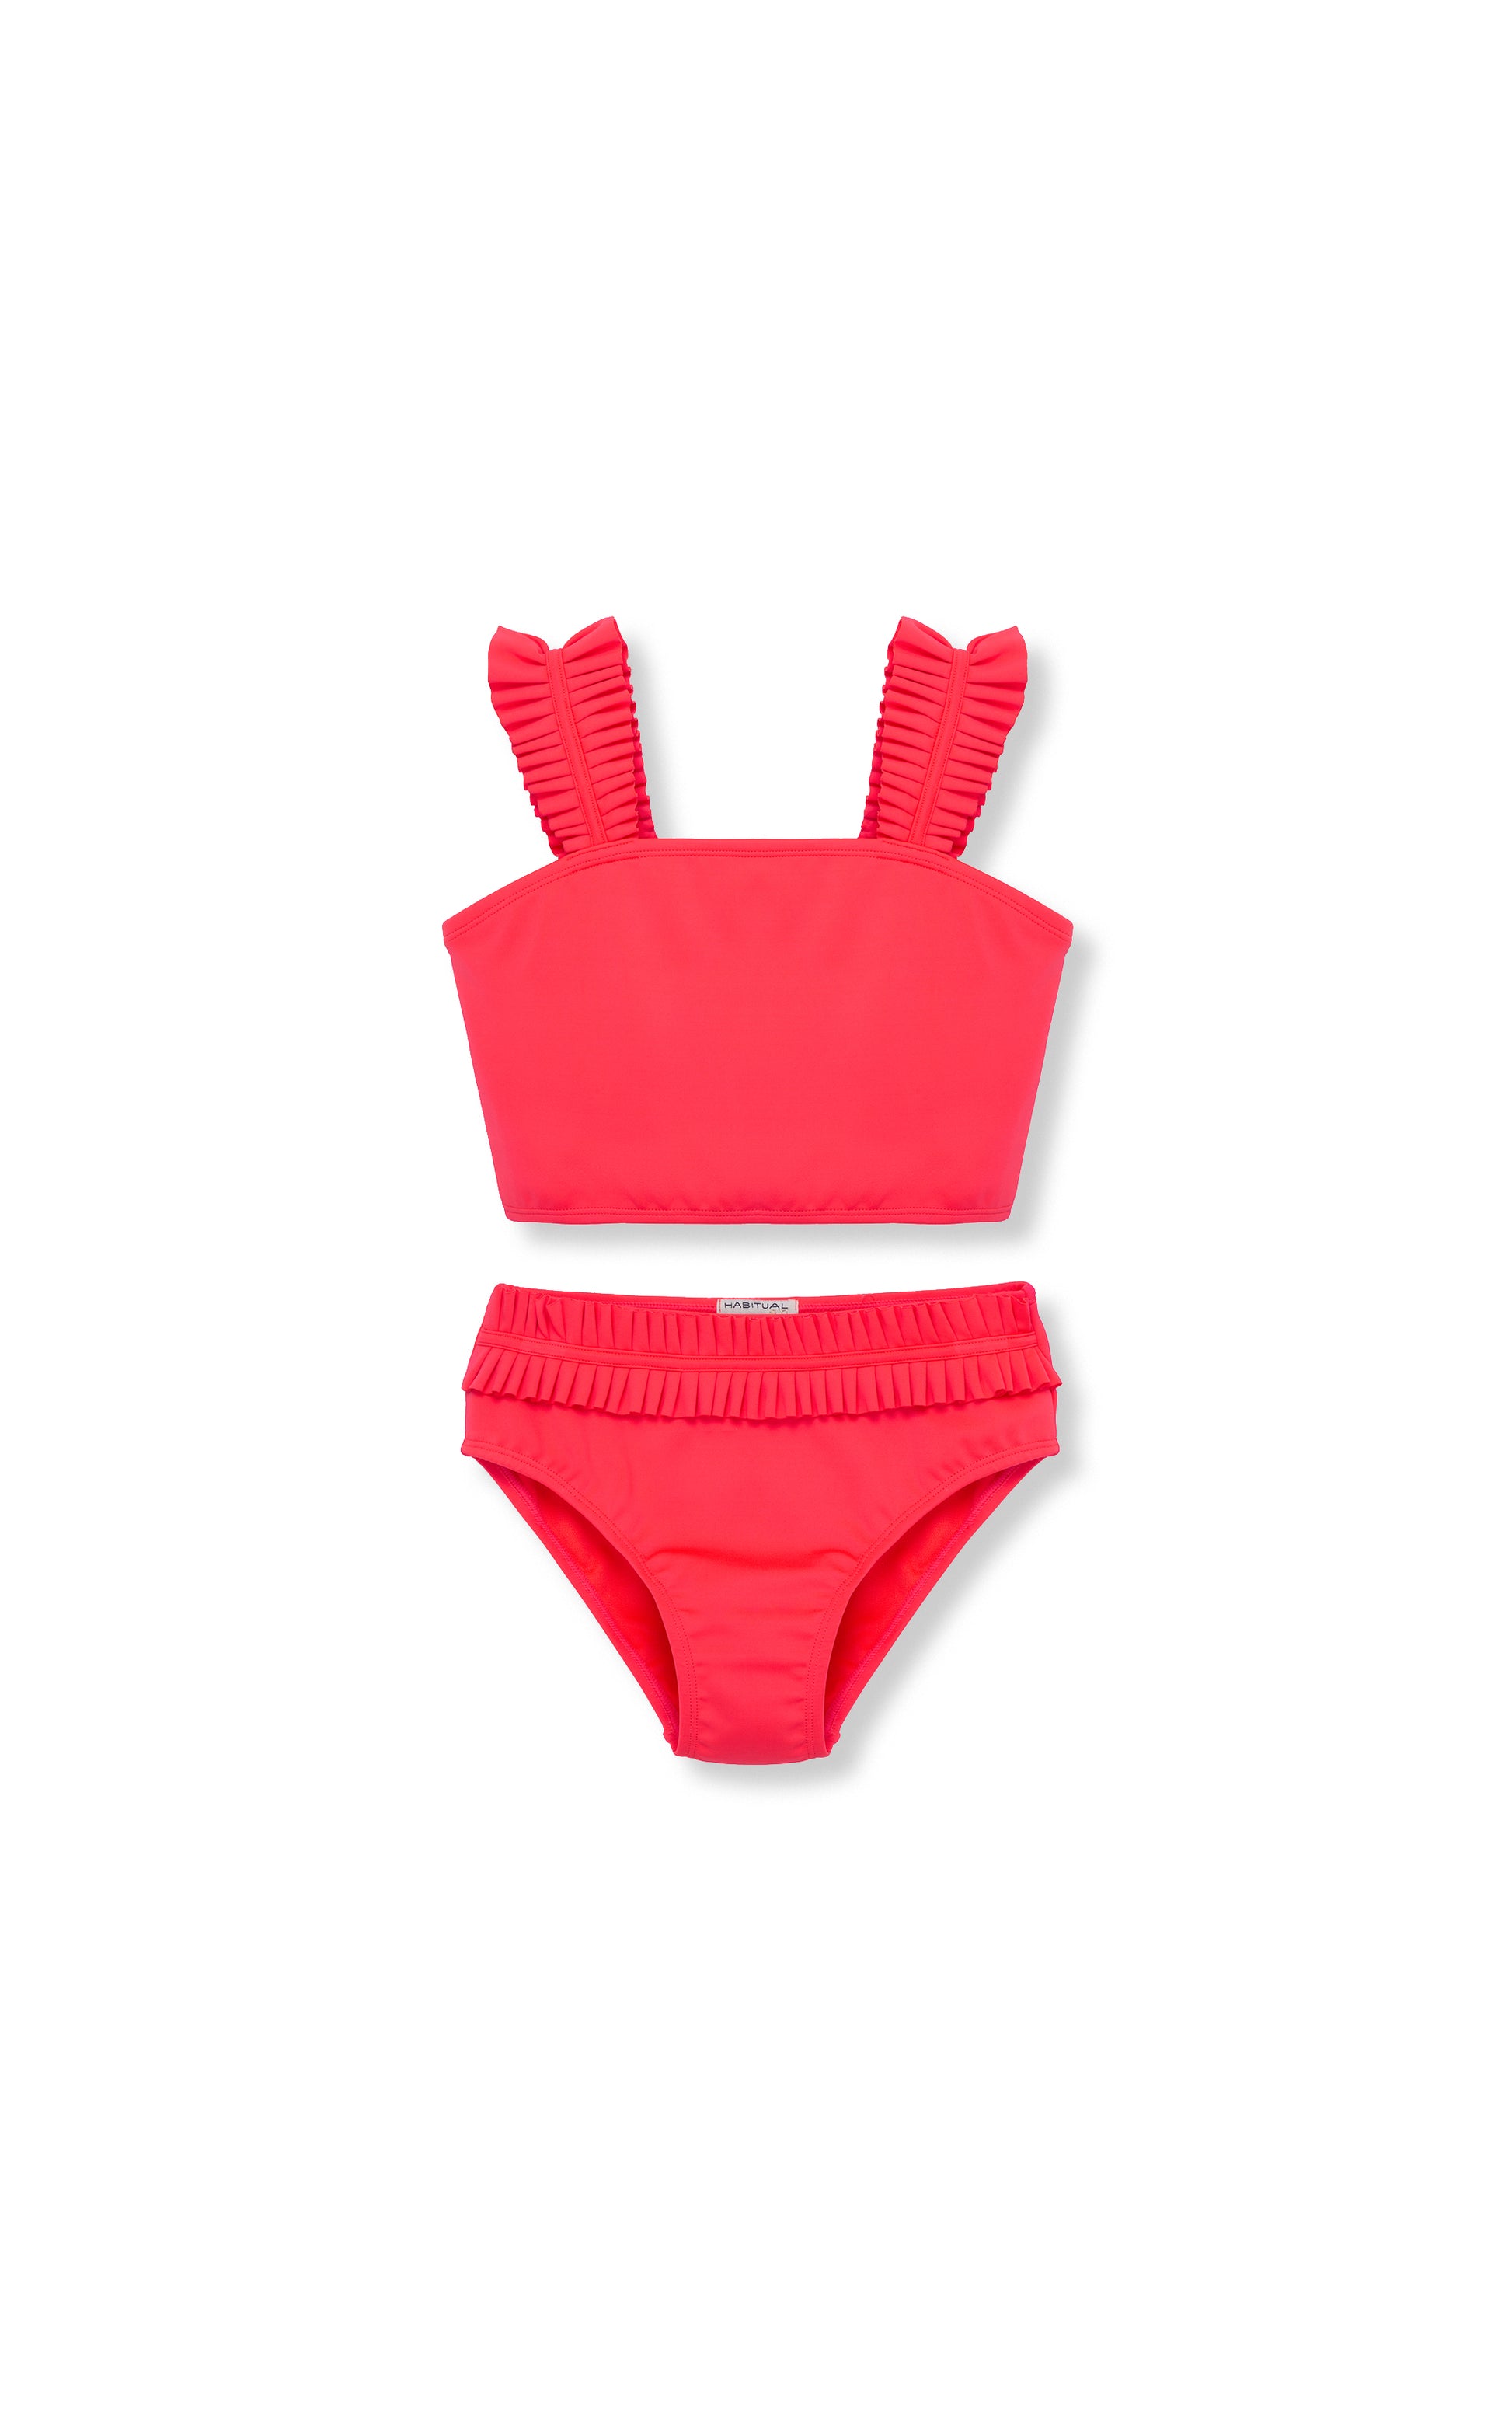 Poolside Party Red Ruffled Bikini Top